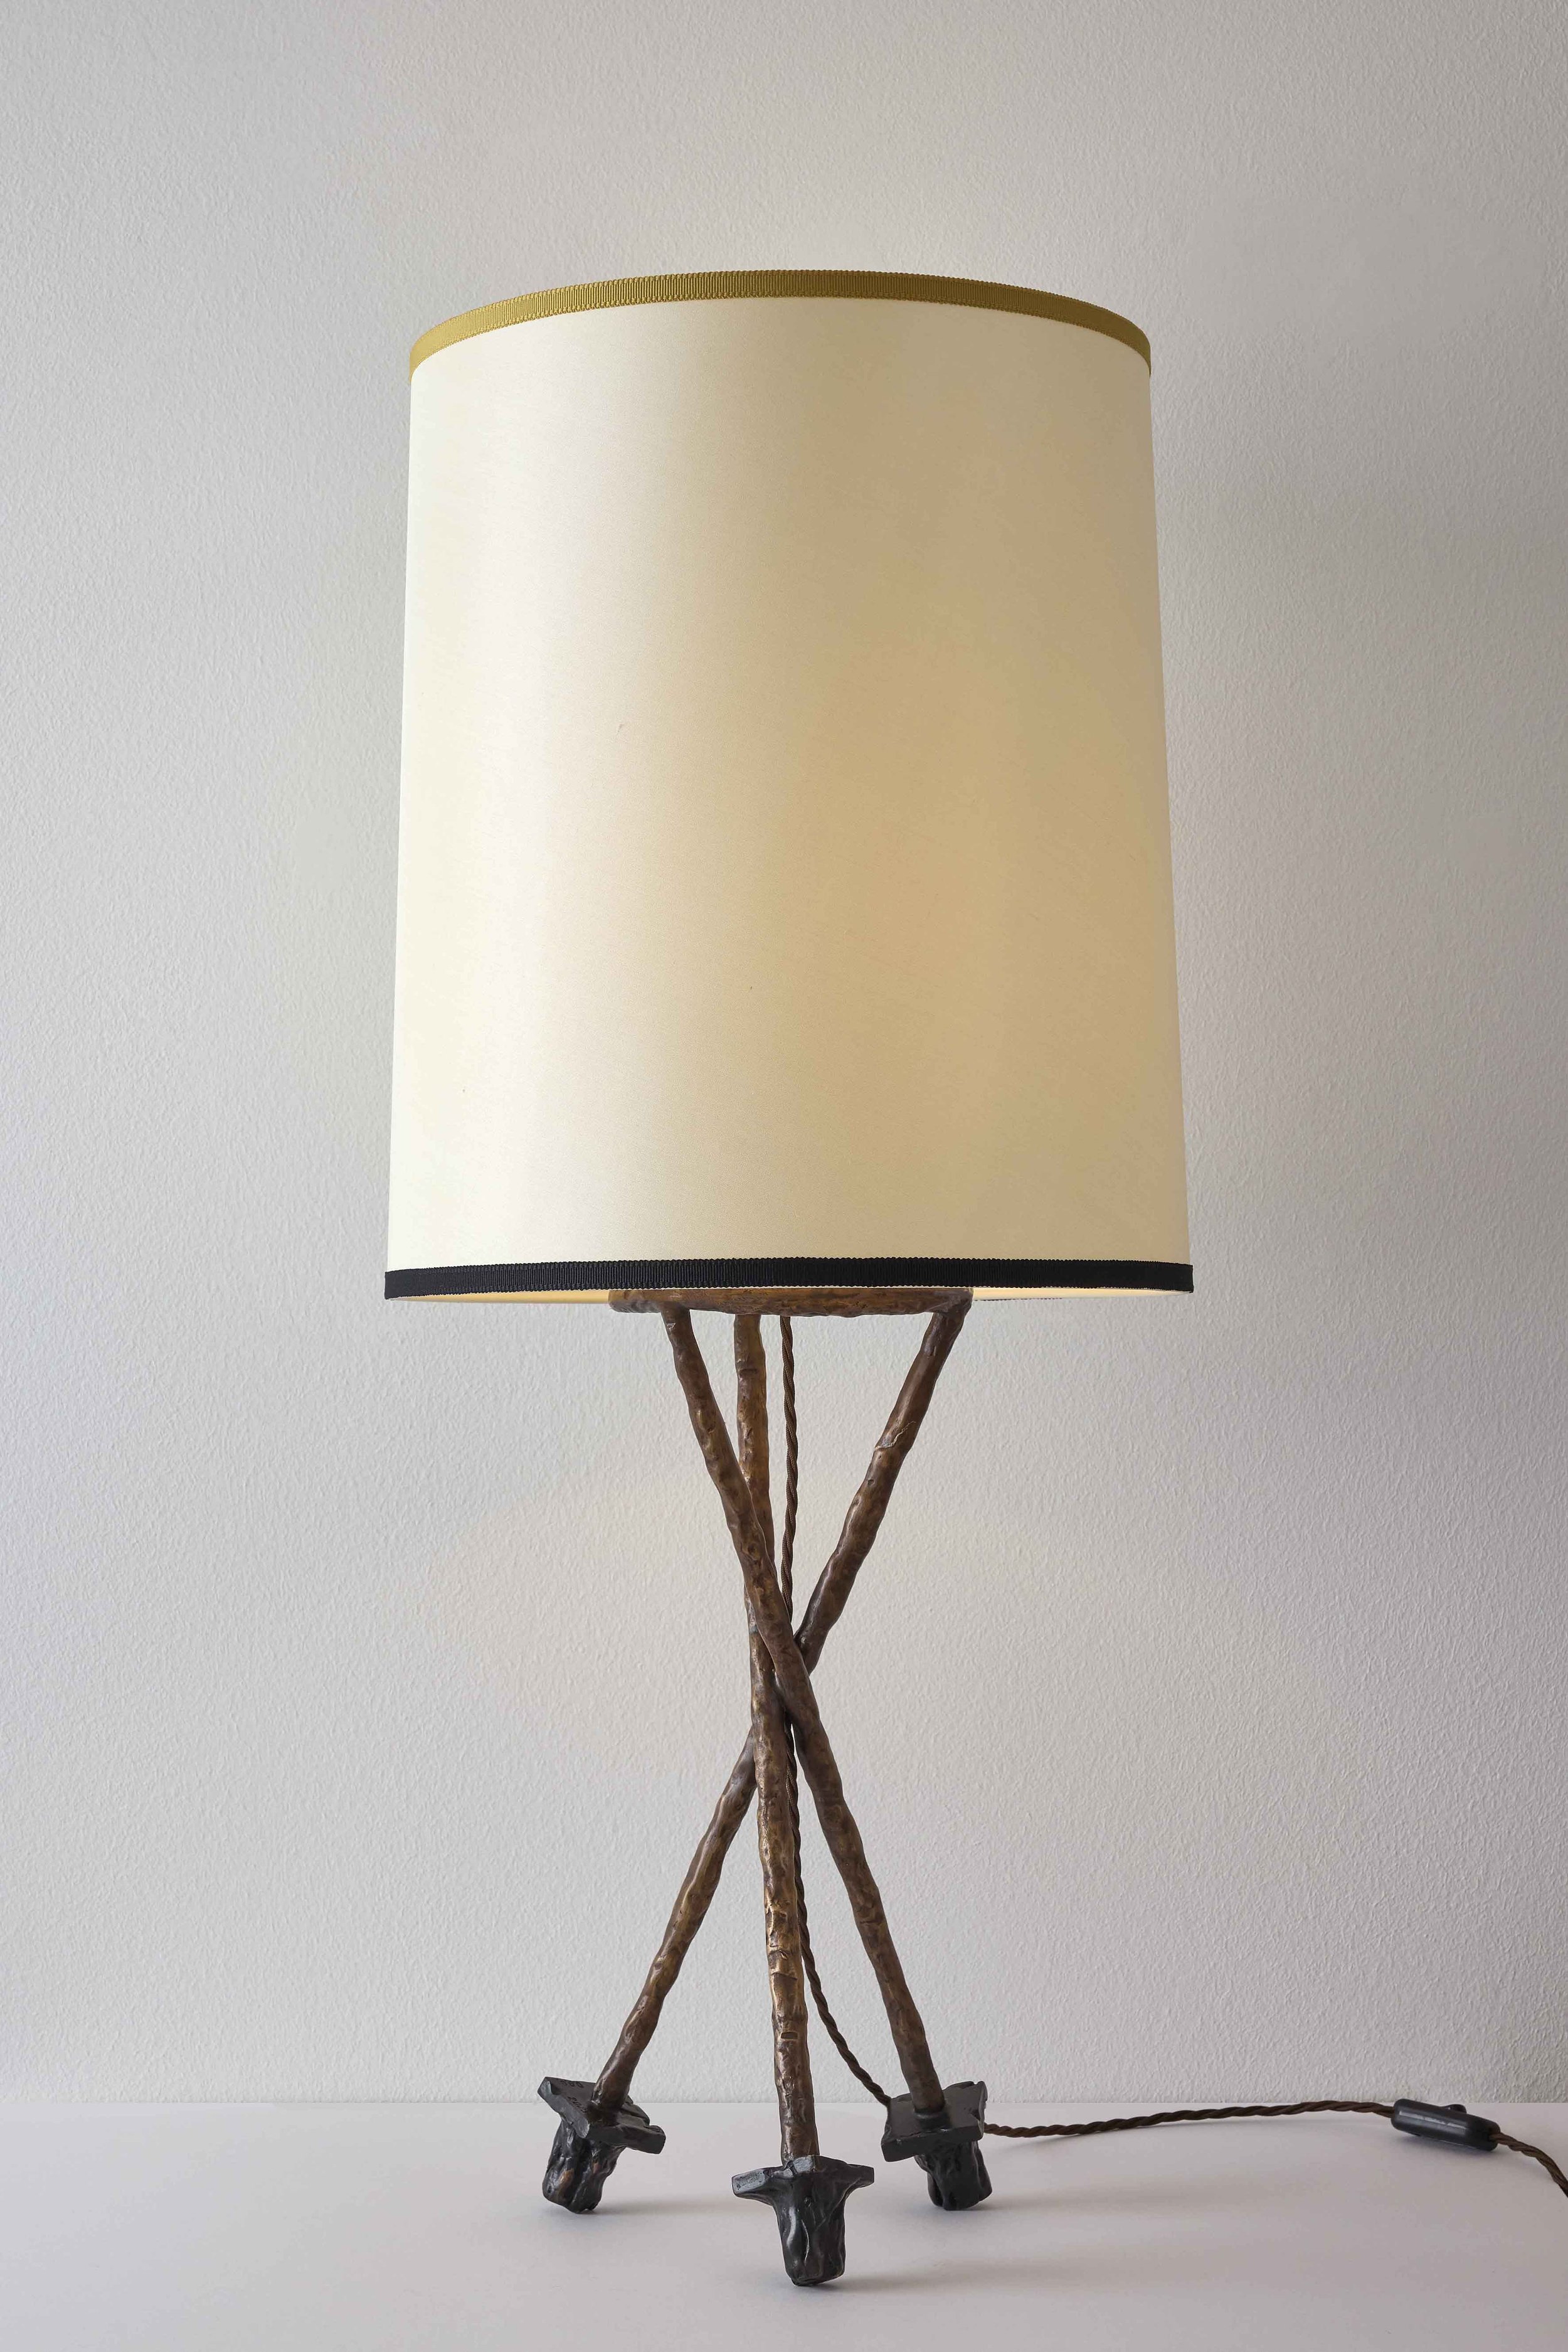 1.MB Table Lamp 'Eaton'.jpg